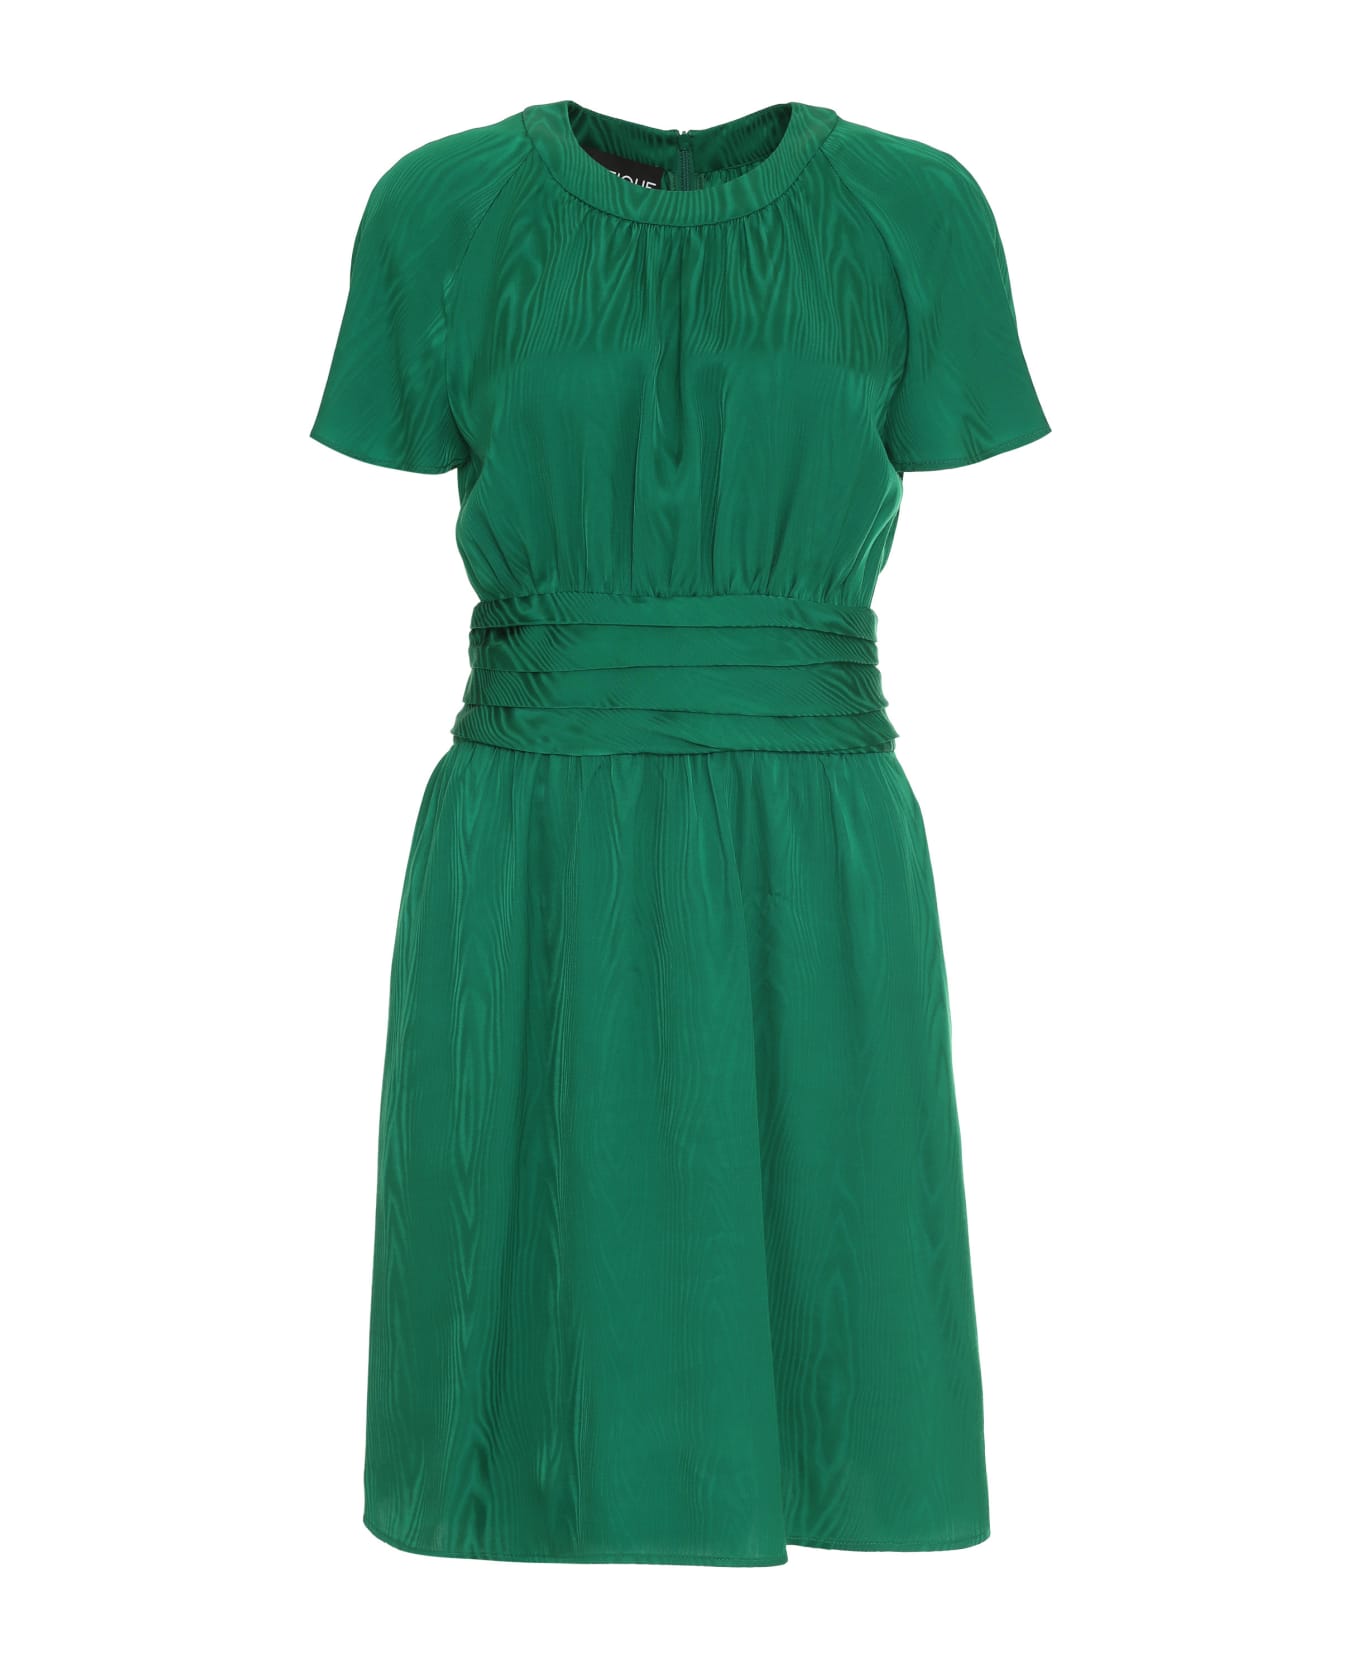 Boutique Moschino Satin Dress - green